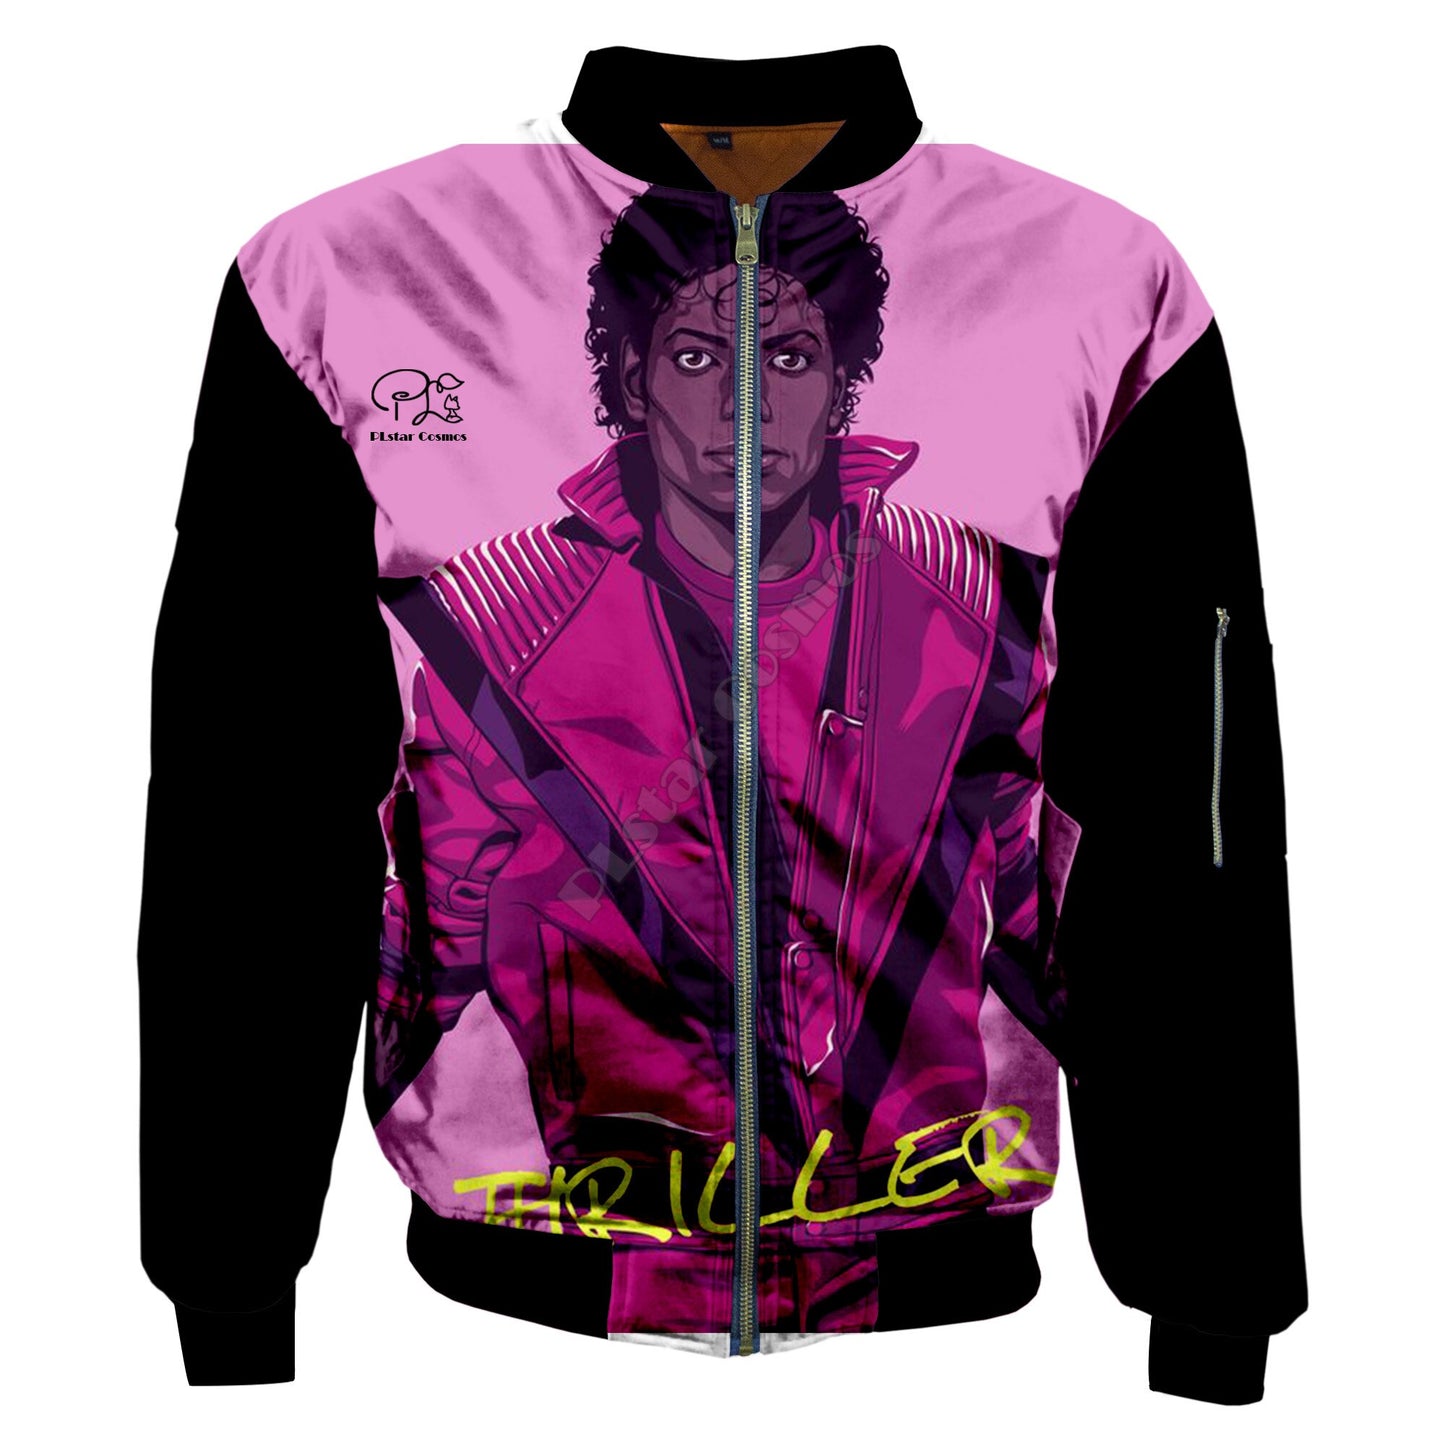 PLstar Cosmos New Fashion Casual 3Dprint Unisex Men/Women King of Pop Michael Jackson Zipper/Bomber Jackets/Hoodies/Hoodie  s-1